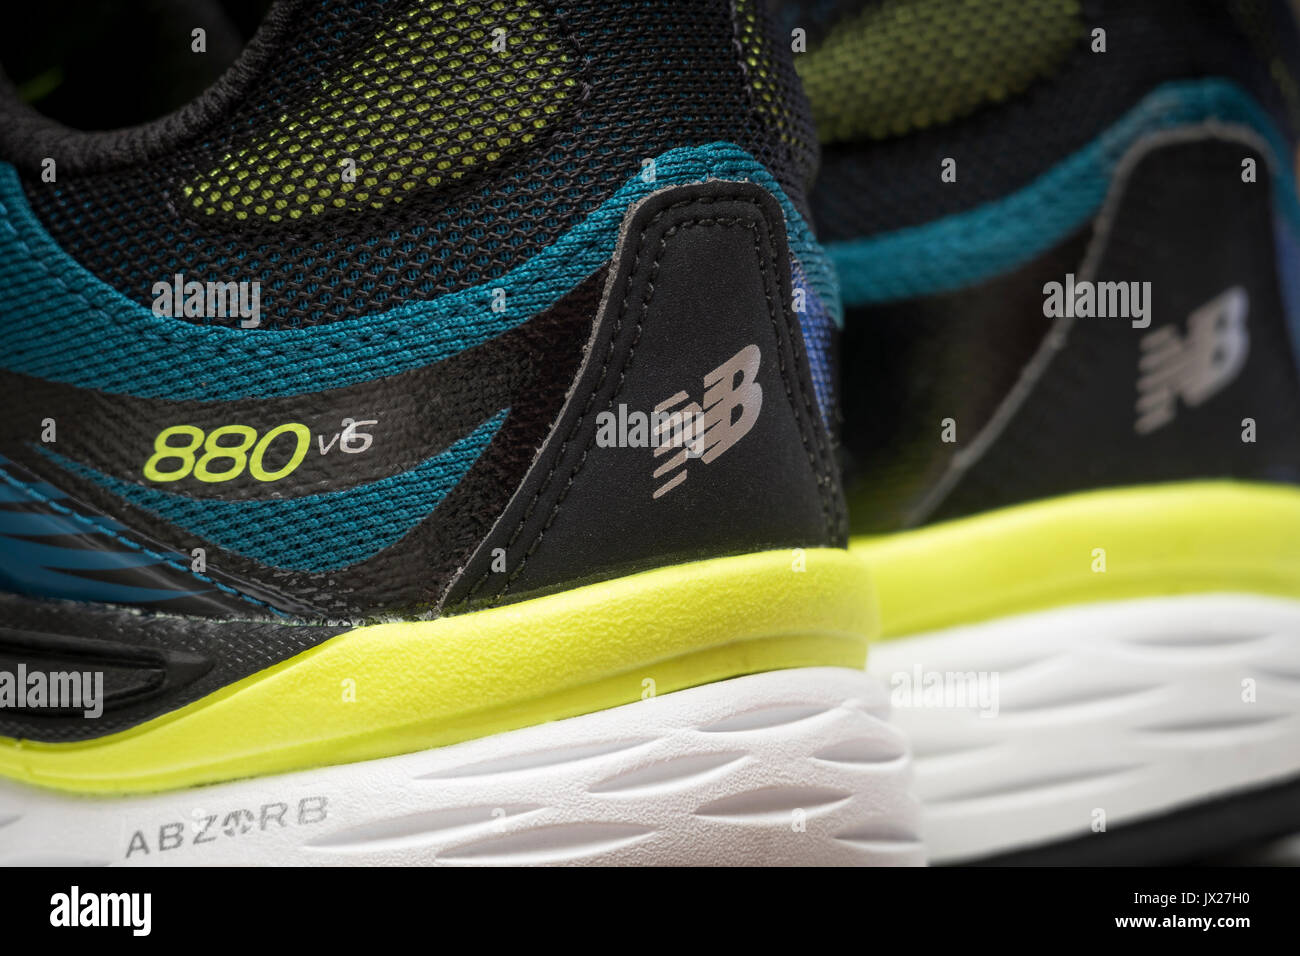 New Balance 880 v6 running shoes, rear closeup view Stock Photo ...